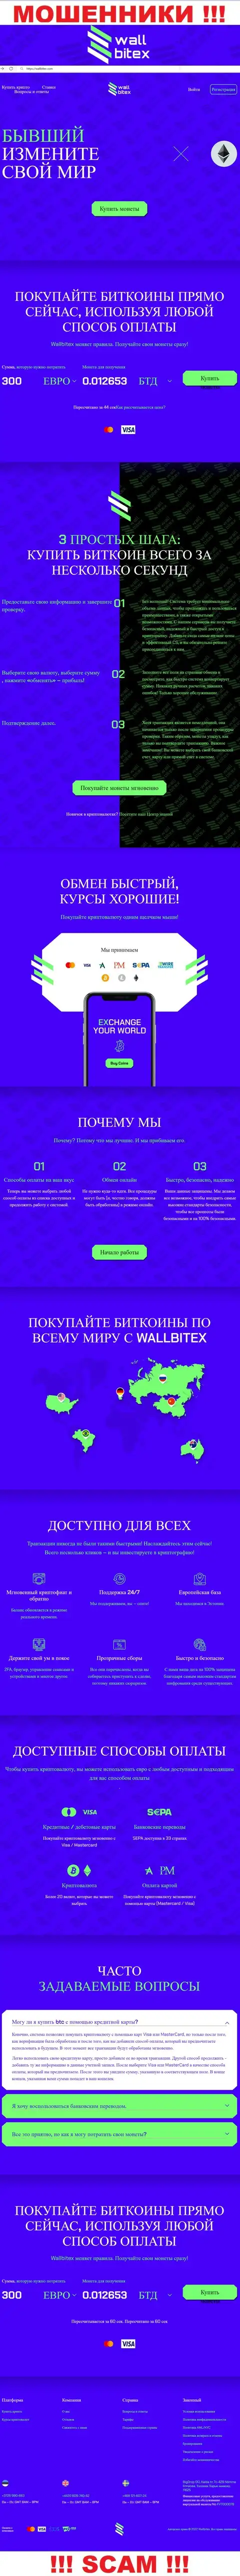 WallBitex Com - это сервис мошеннической компании WallBitex